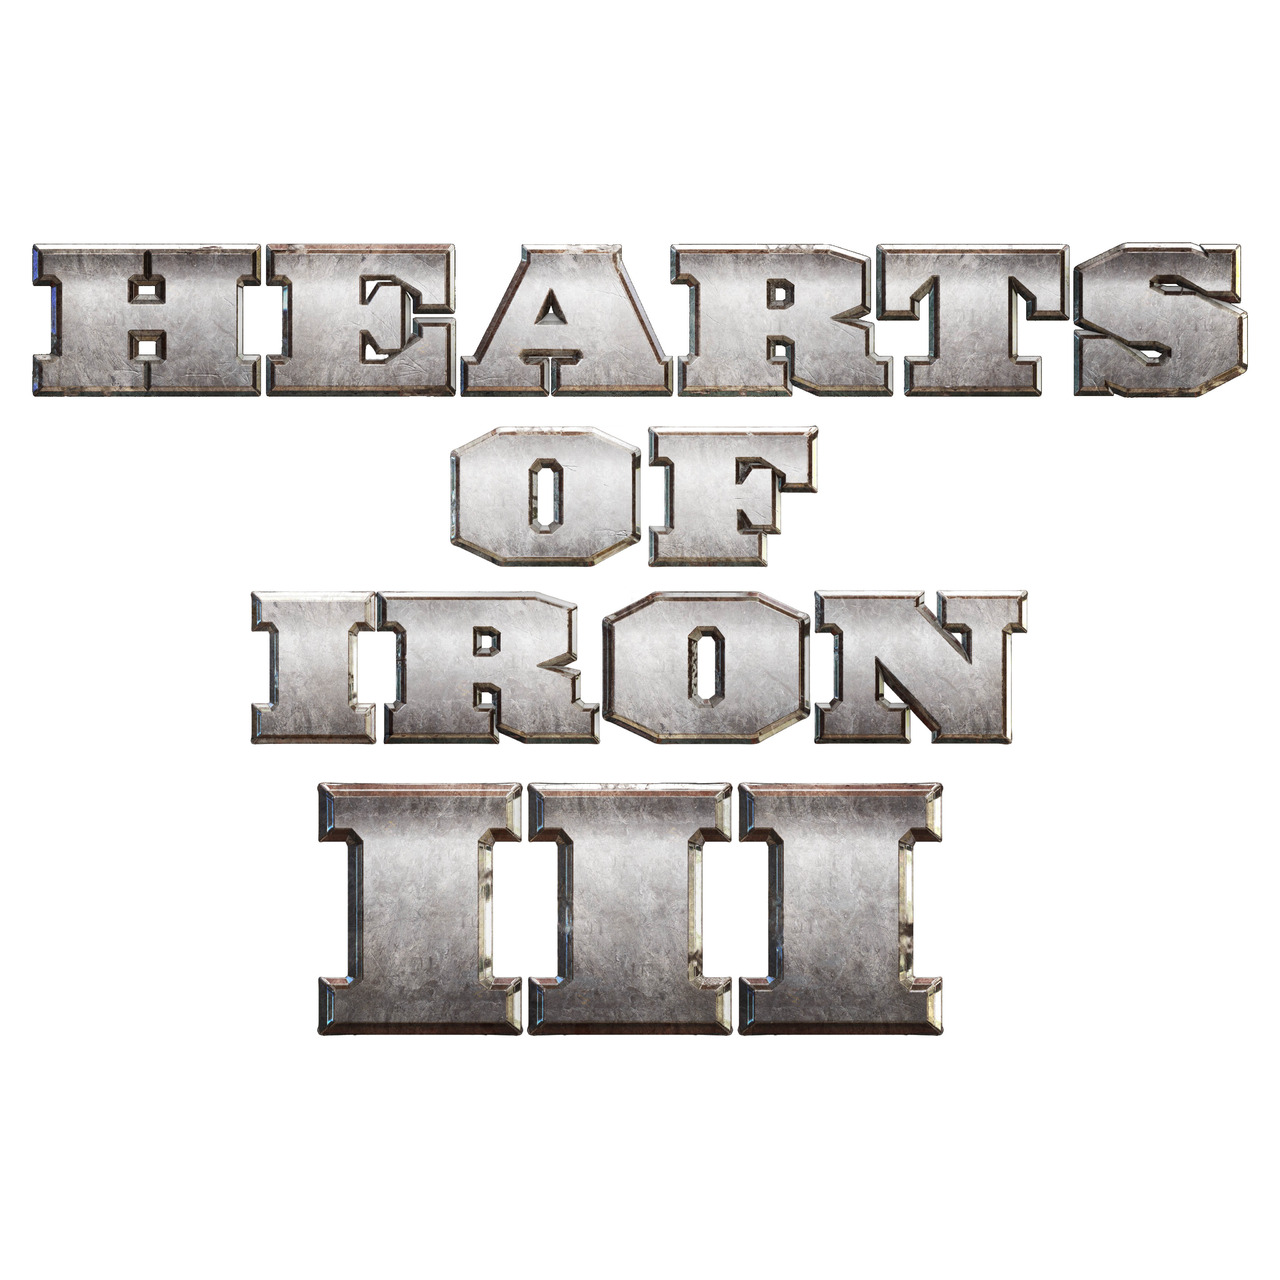 Gameart de Hearts of Iron III para PC